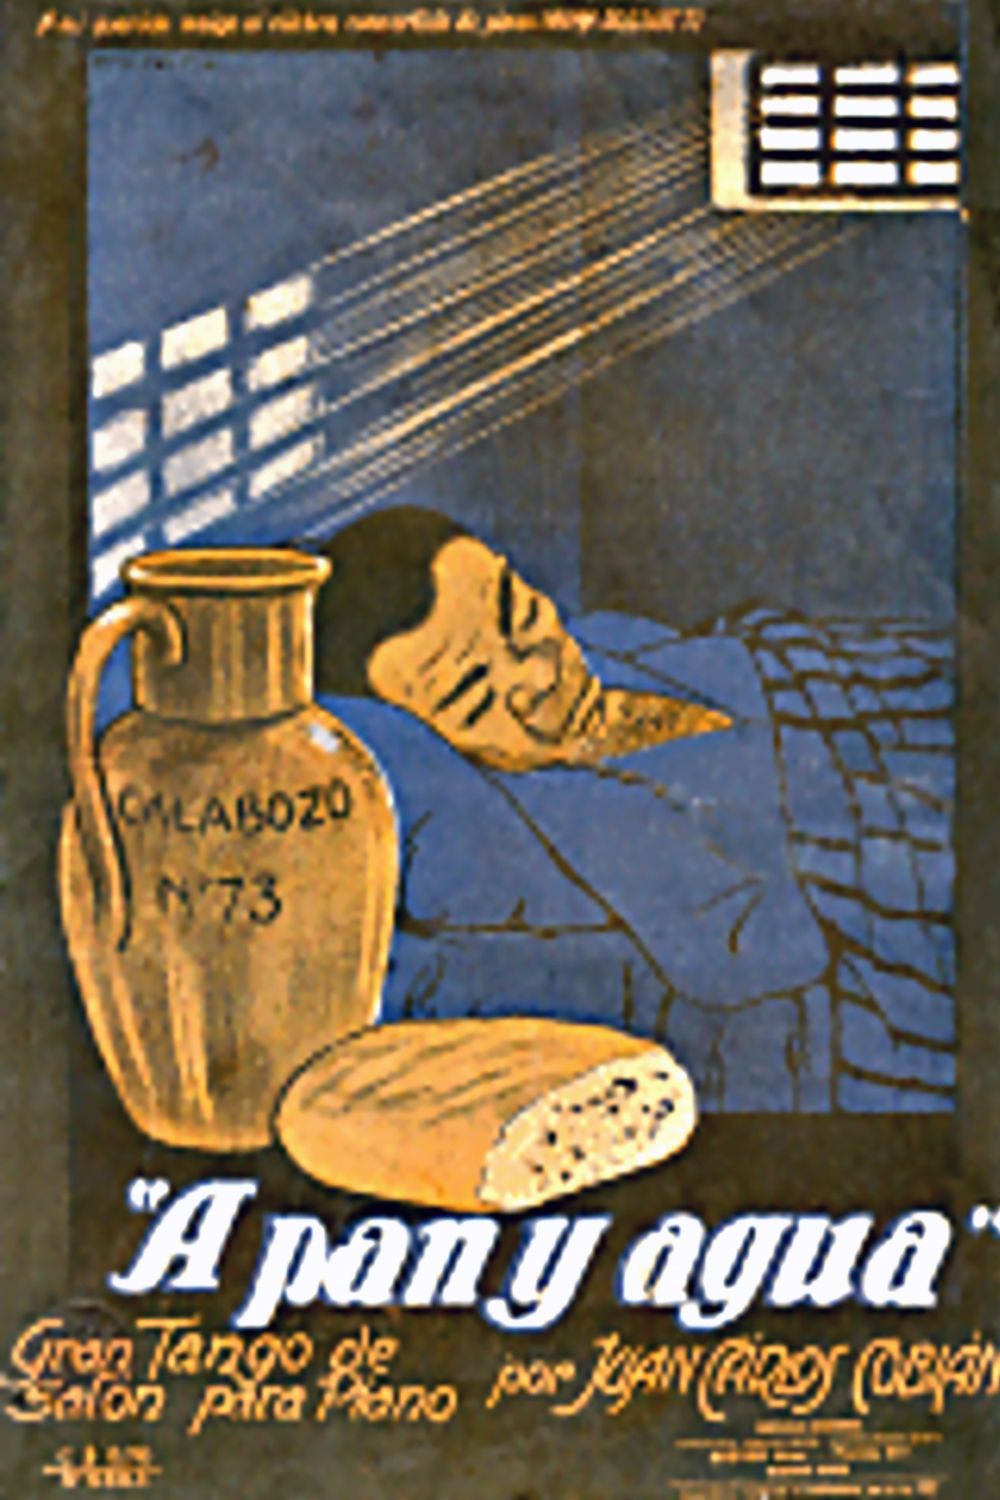 'A pan y agua', Argentine Tango music sheet cover.